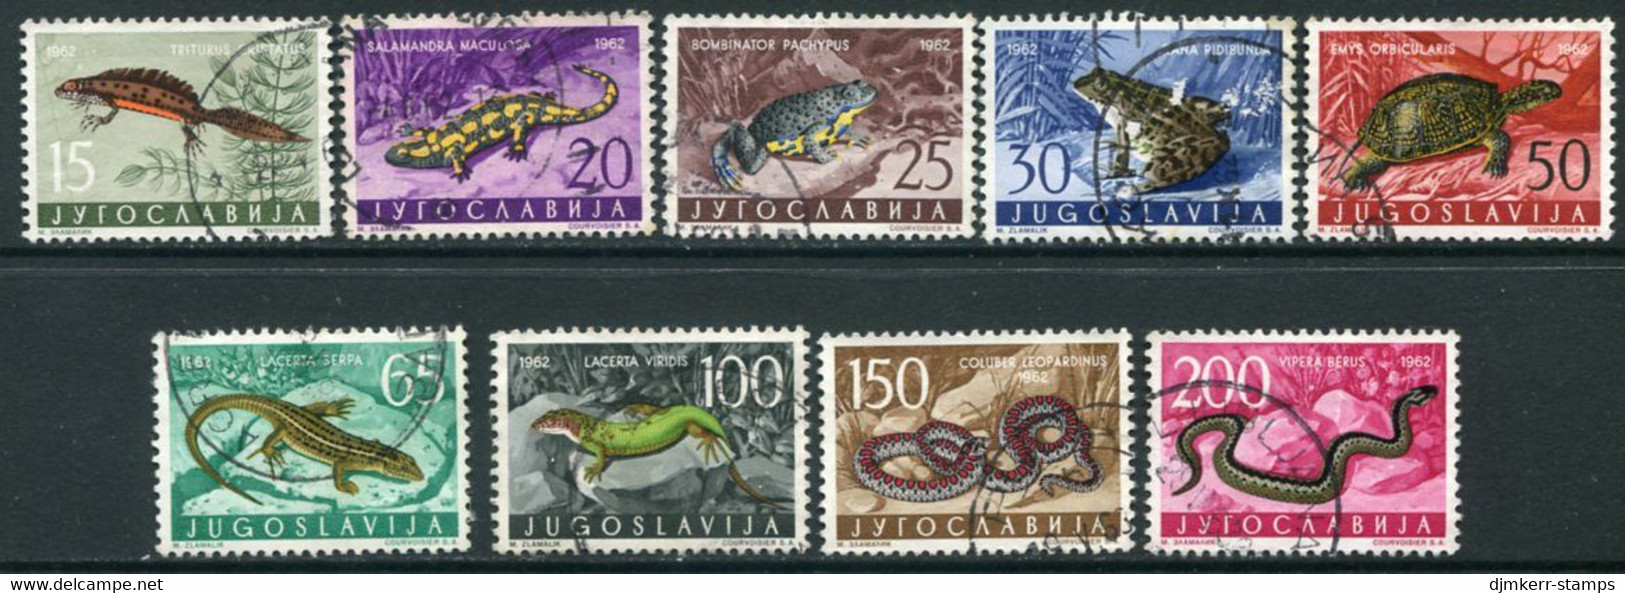 YUGOSLAVIA 1962 Amphibians And Reptiles  Used.  Michel 1007-15 - Usati